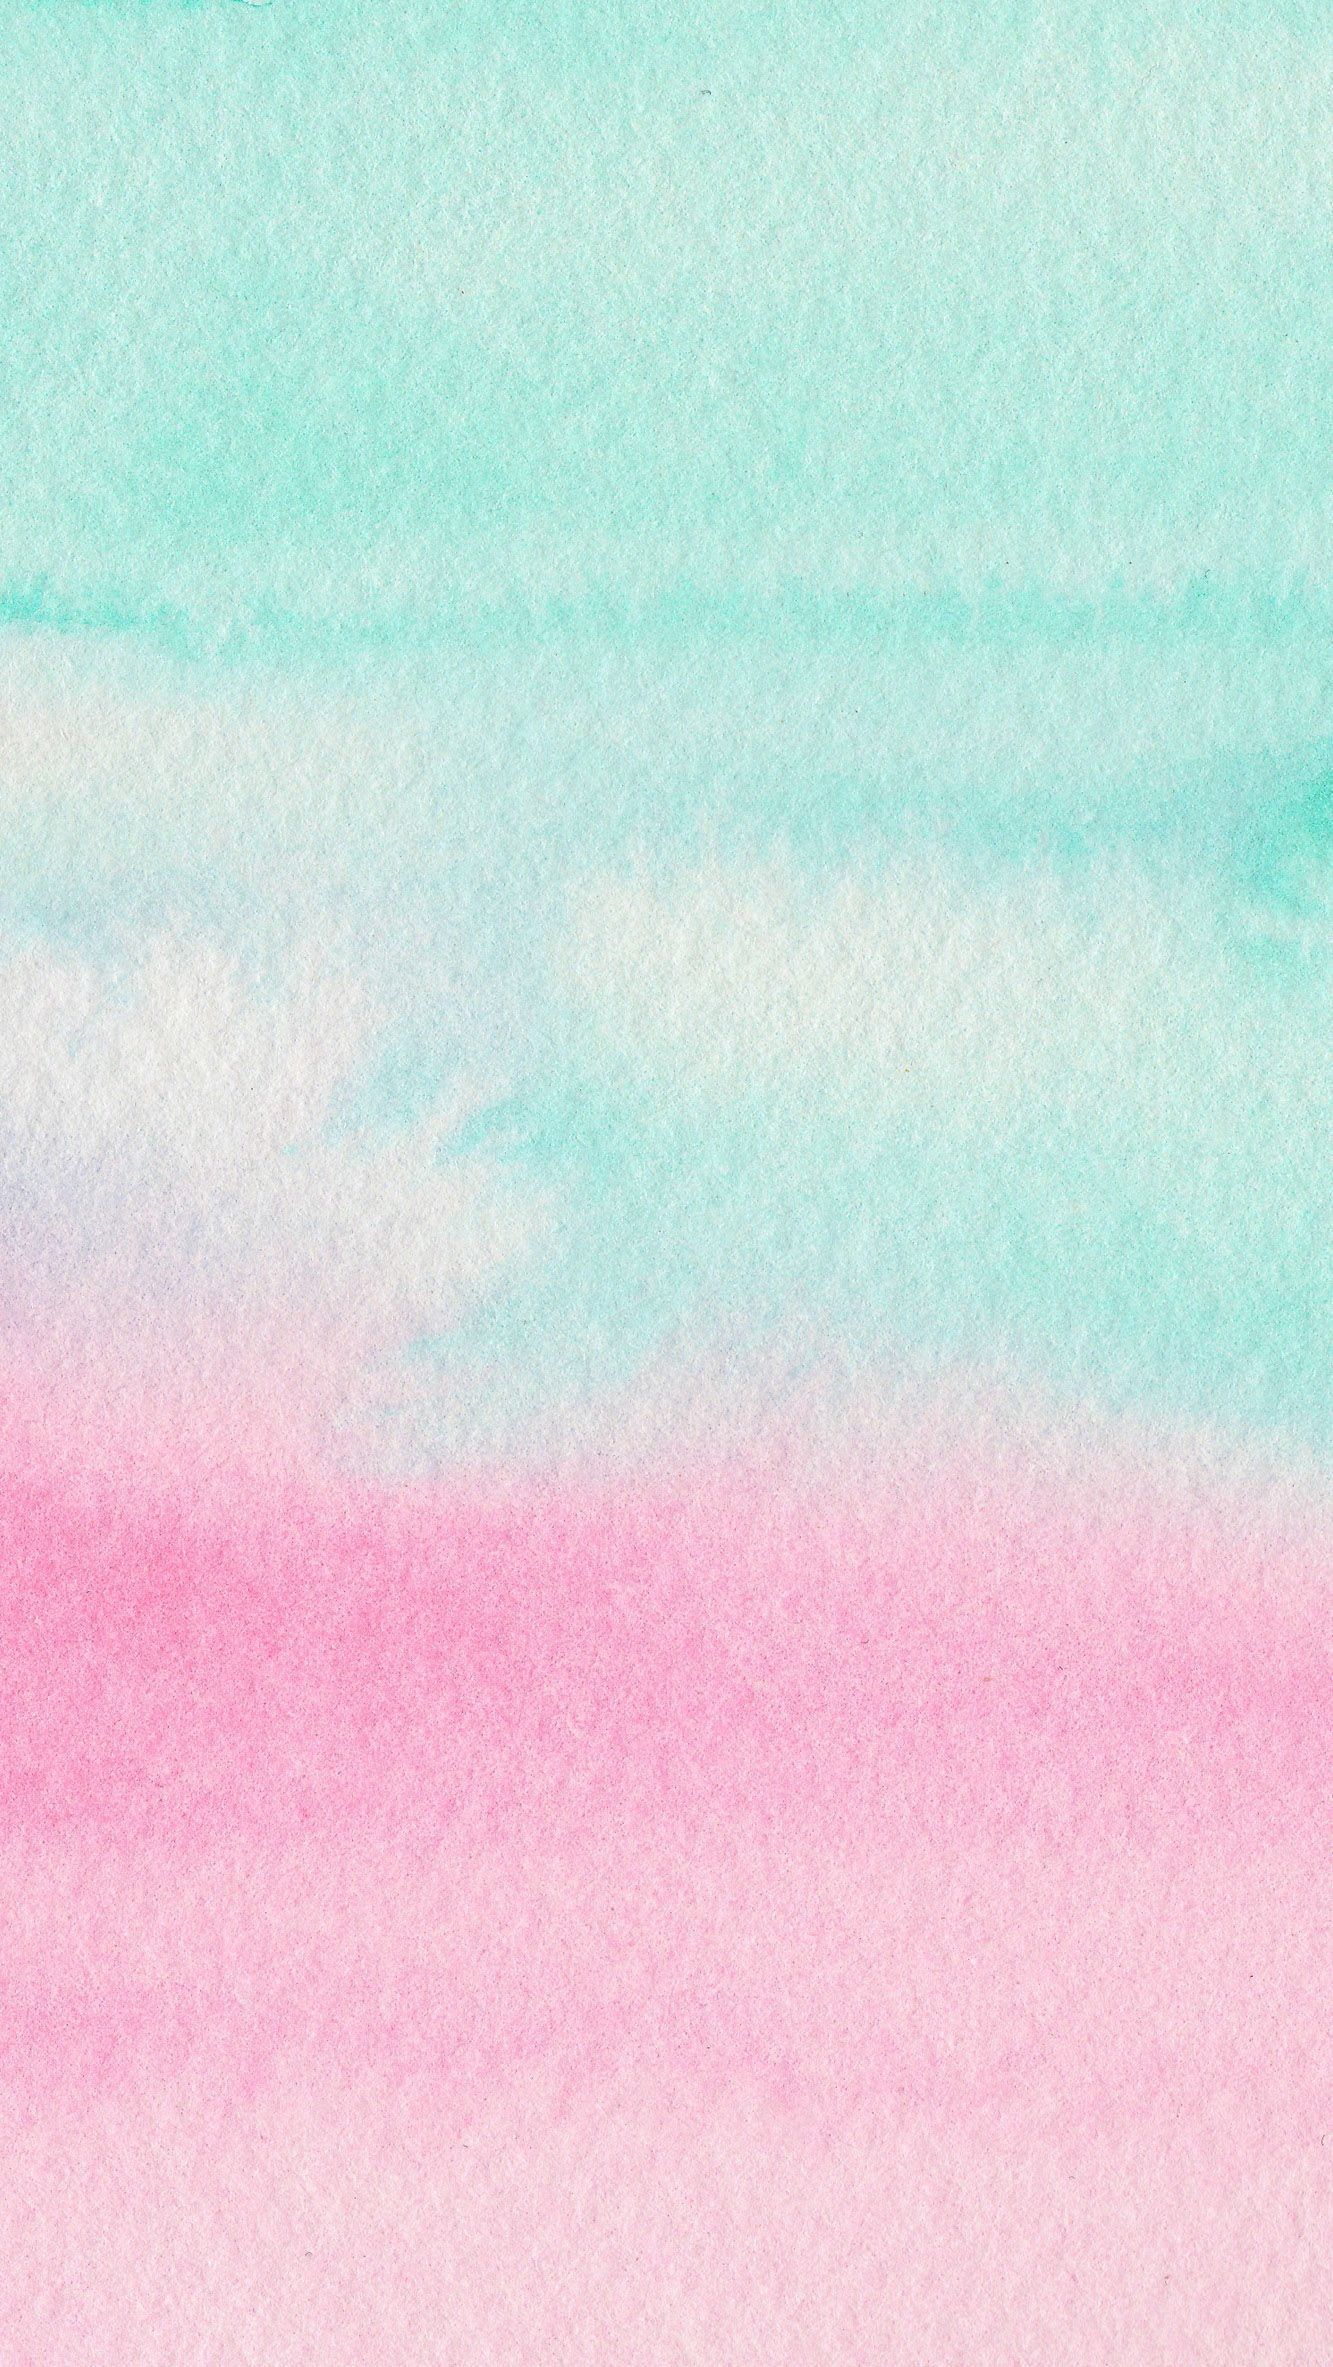 pastel color wallpaper hd, pink, aqua, blue, turquoise, sky